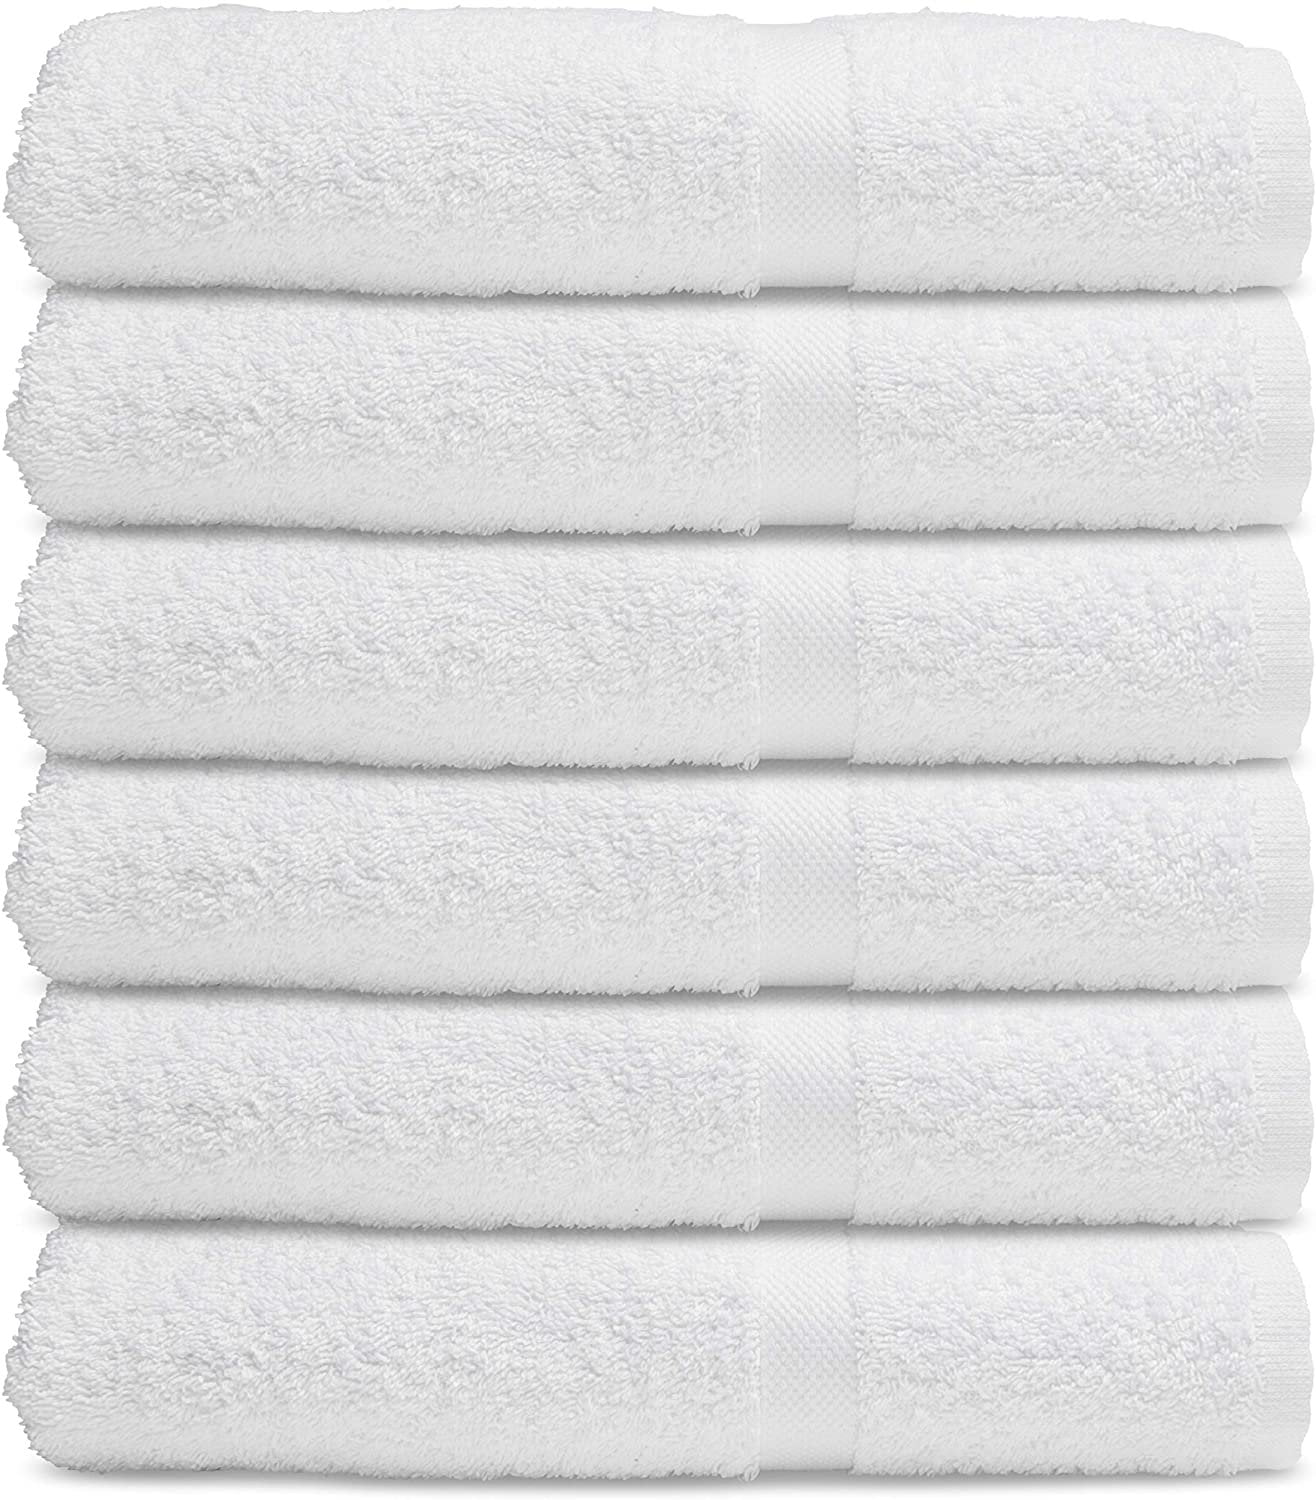 Cotton Sports Gym Bath Towel Microfiber Hair Face Towel for Bathroom Beach Towel